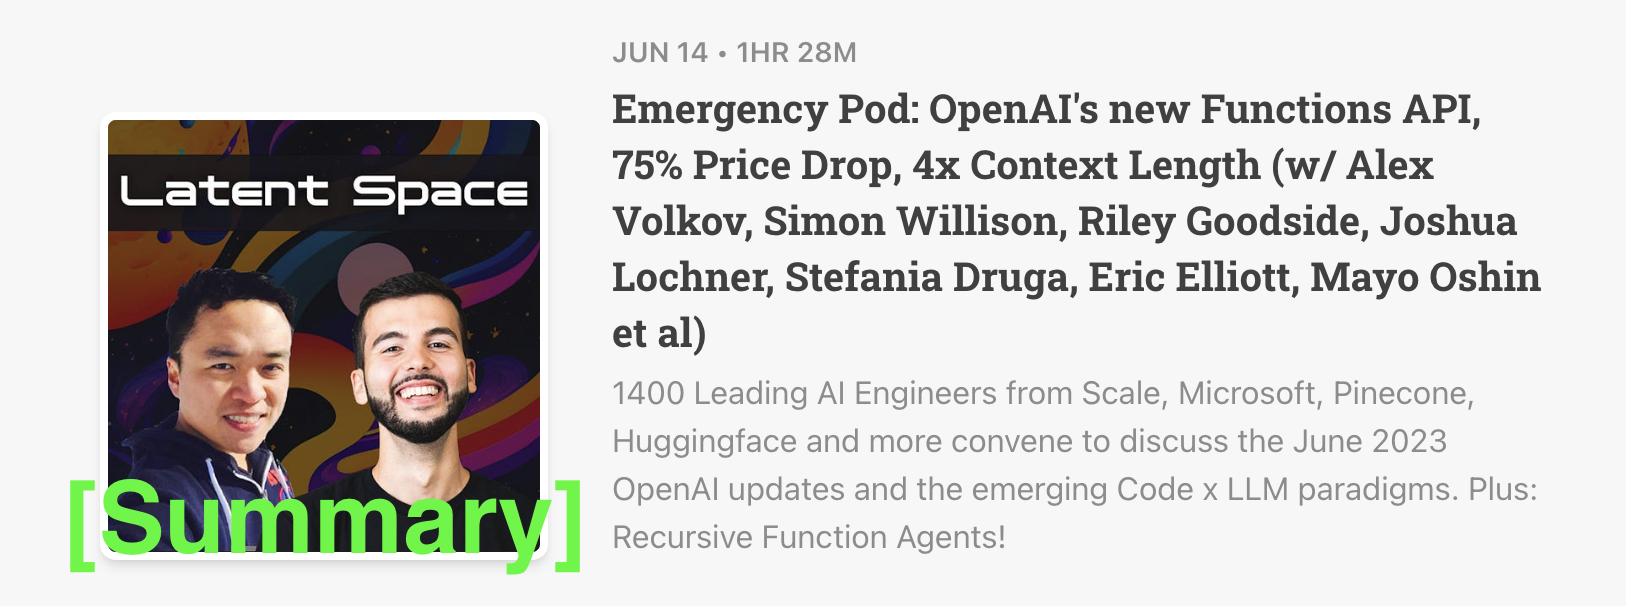 Latent Space Podcast 6/14/23 [Summary] - Emergency Pod: OpenAI's new Functions API, 75% Price Drop, 4x Context Length (w/ Alex Volkov, Simon Willison, Riley Goodside, Joshua Lochner, Stefania Druga, Eric Elliott, Mayo Oshin et al)